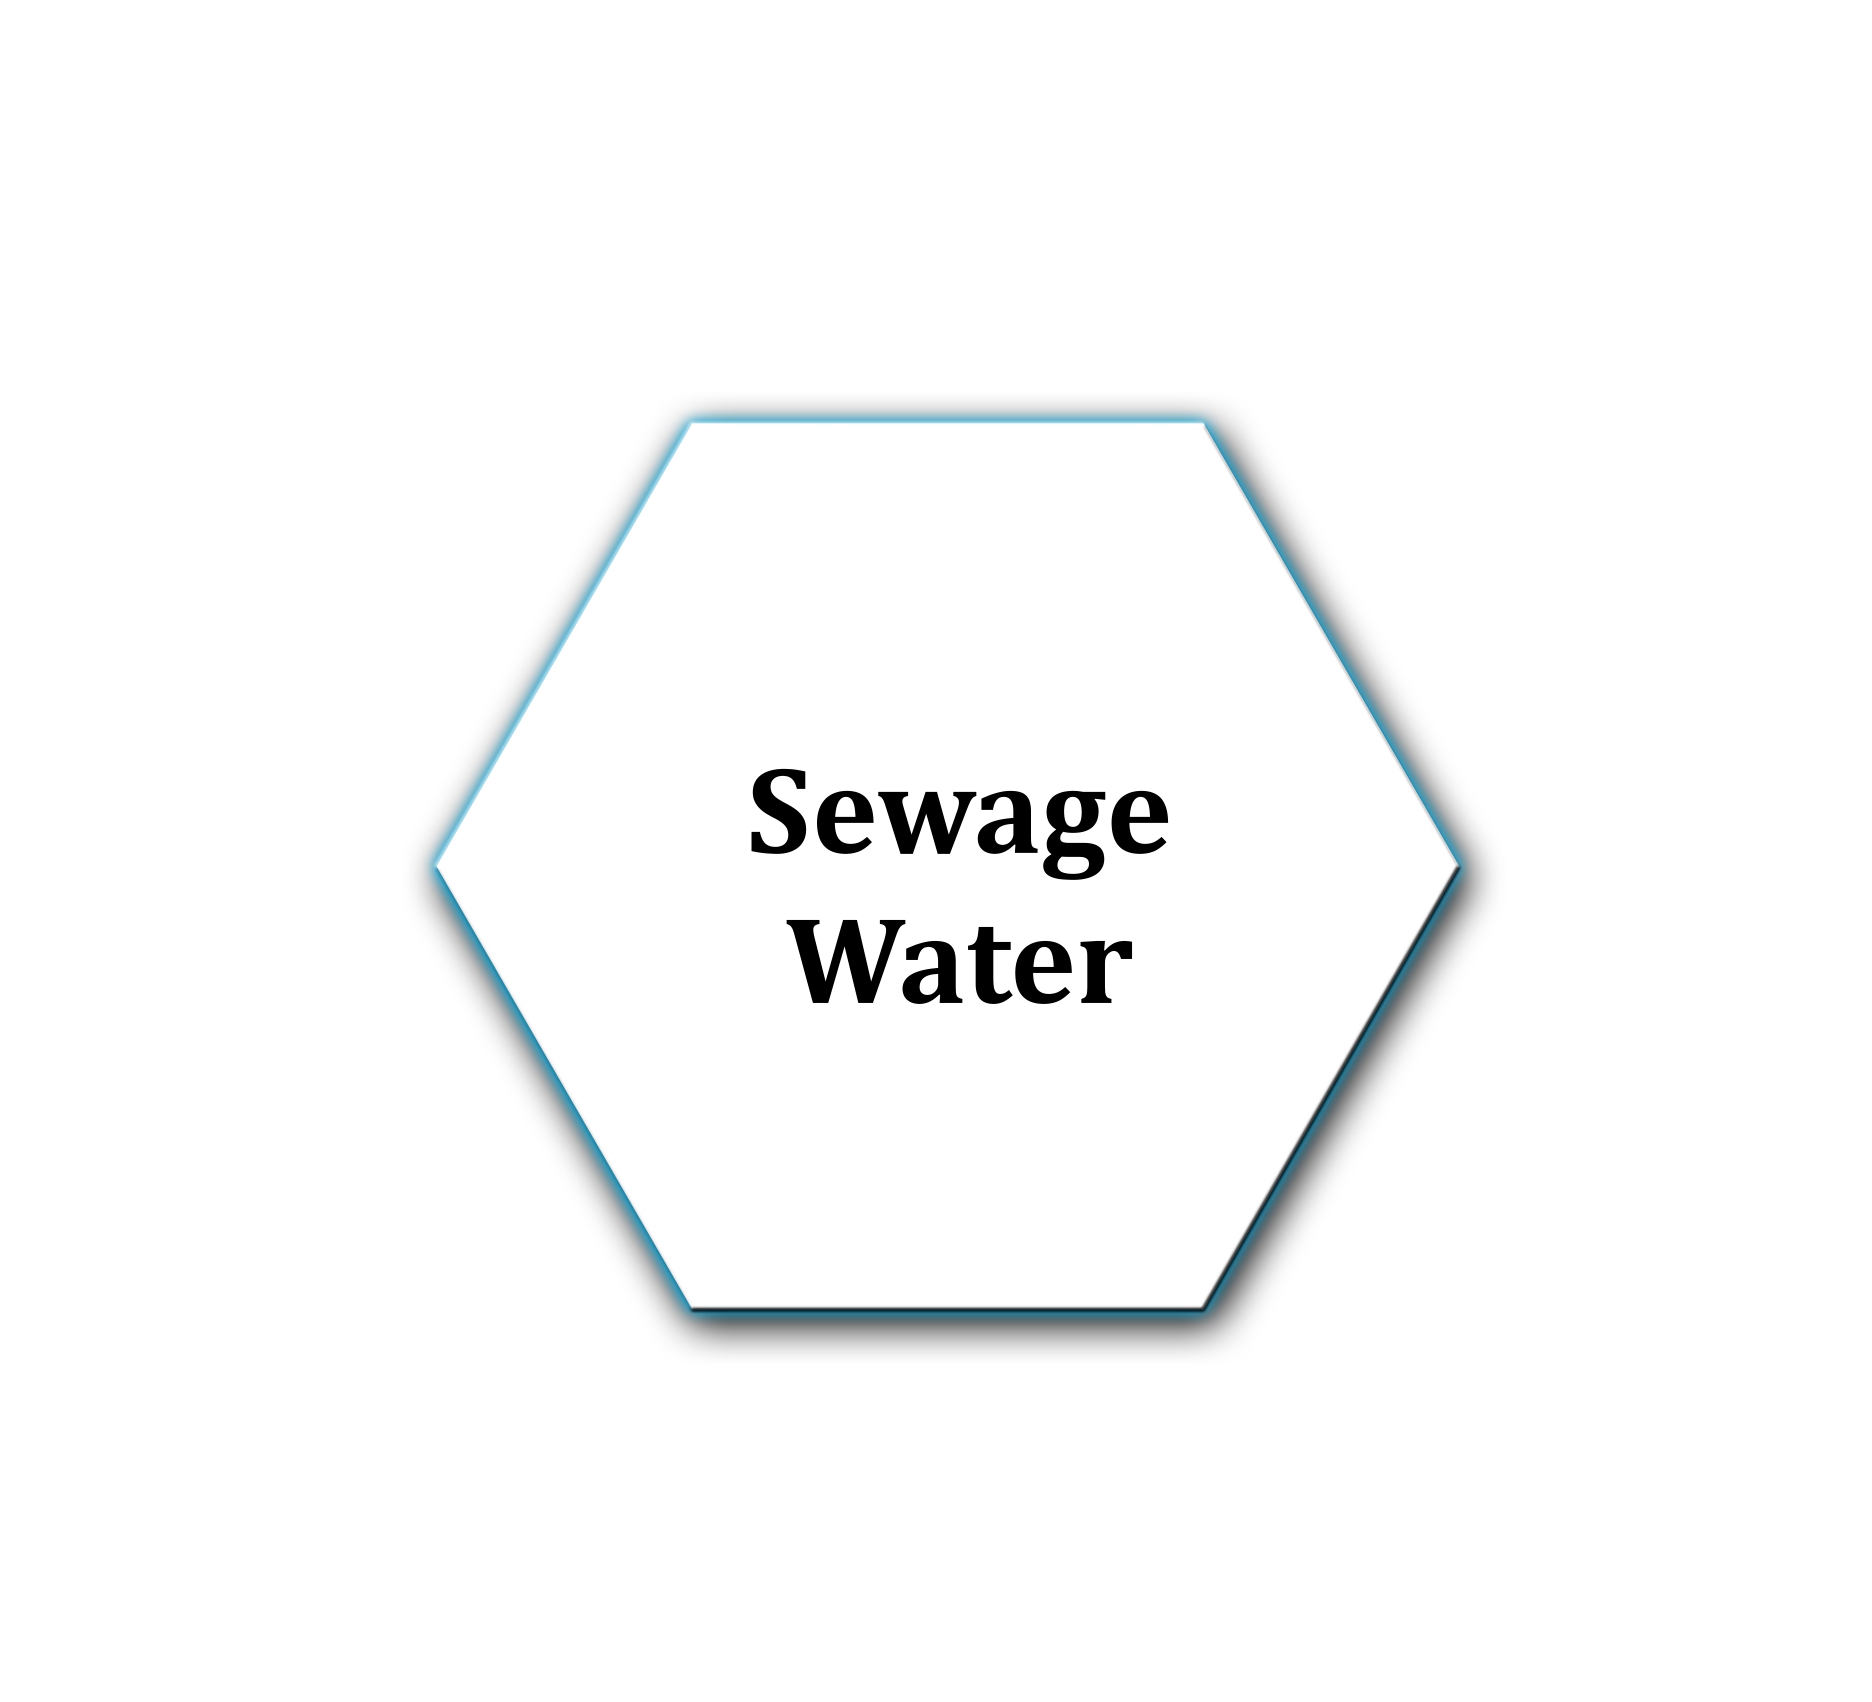 Sewage water